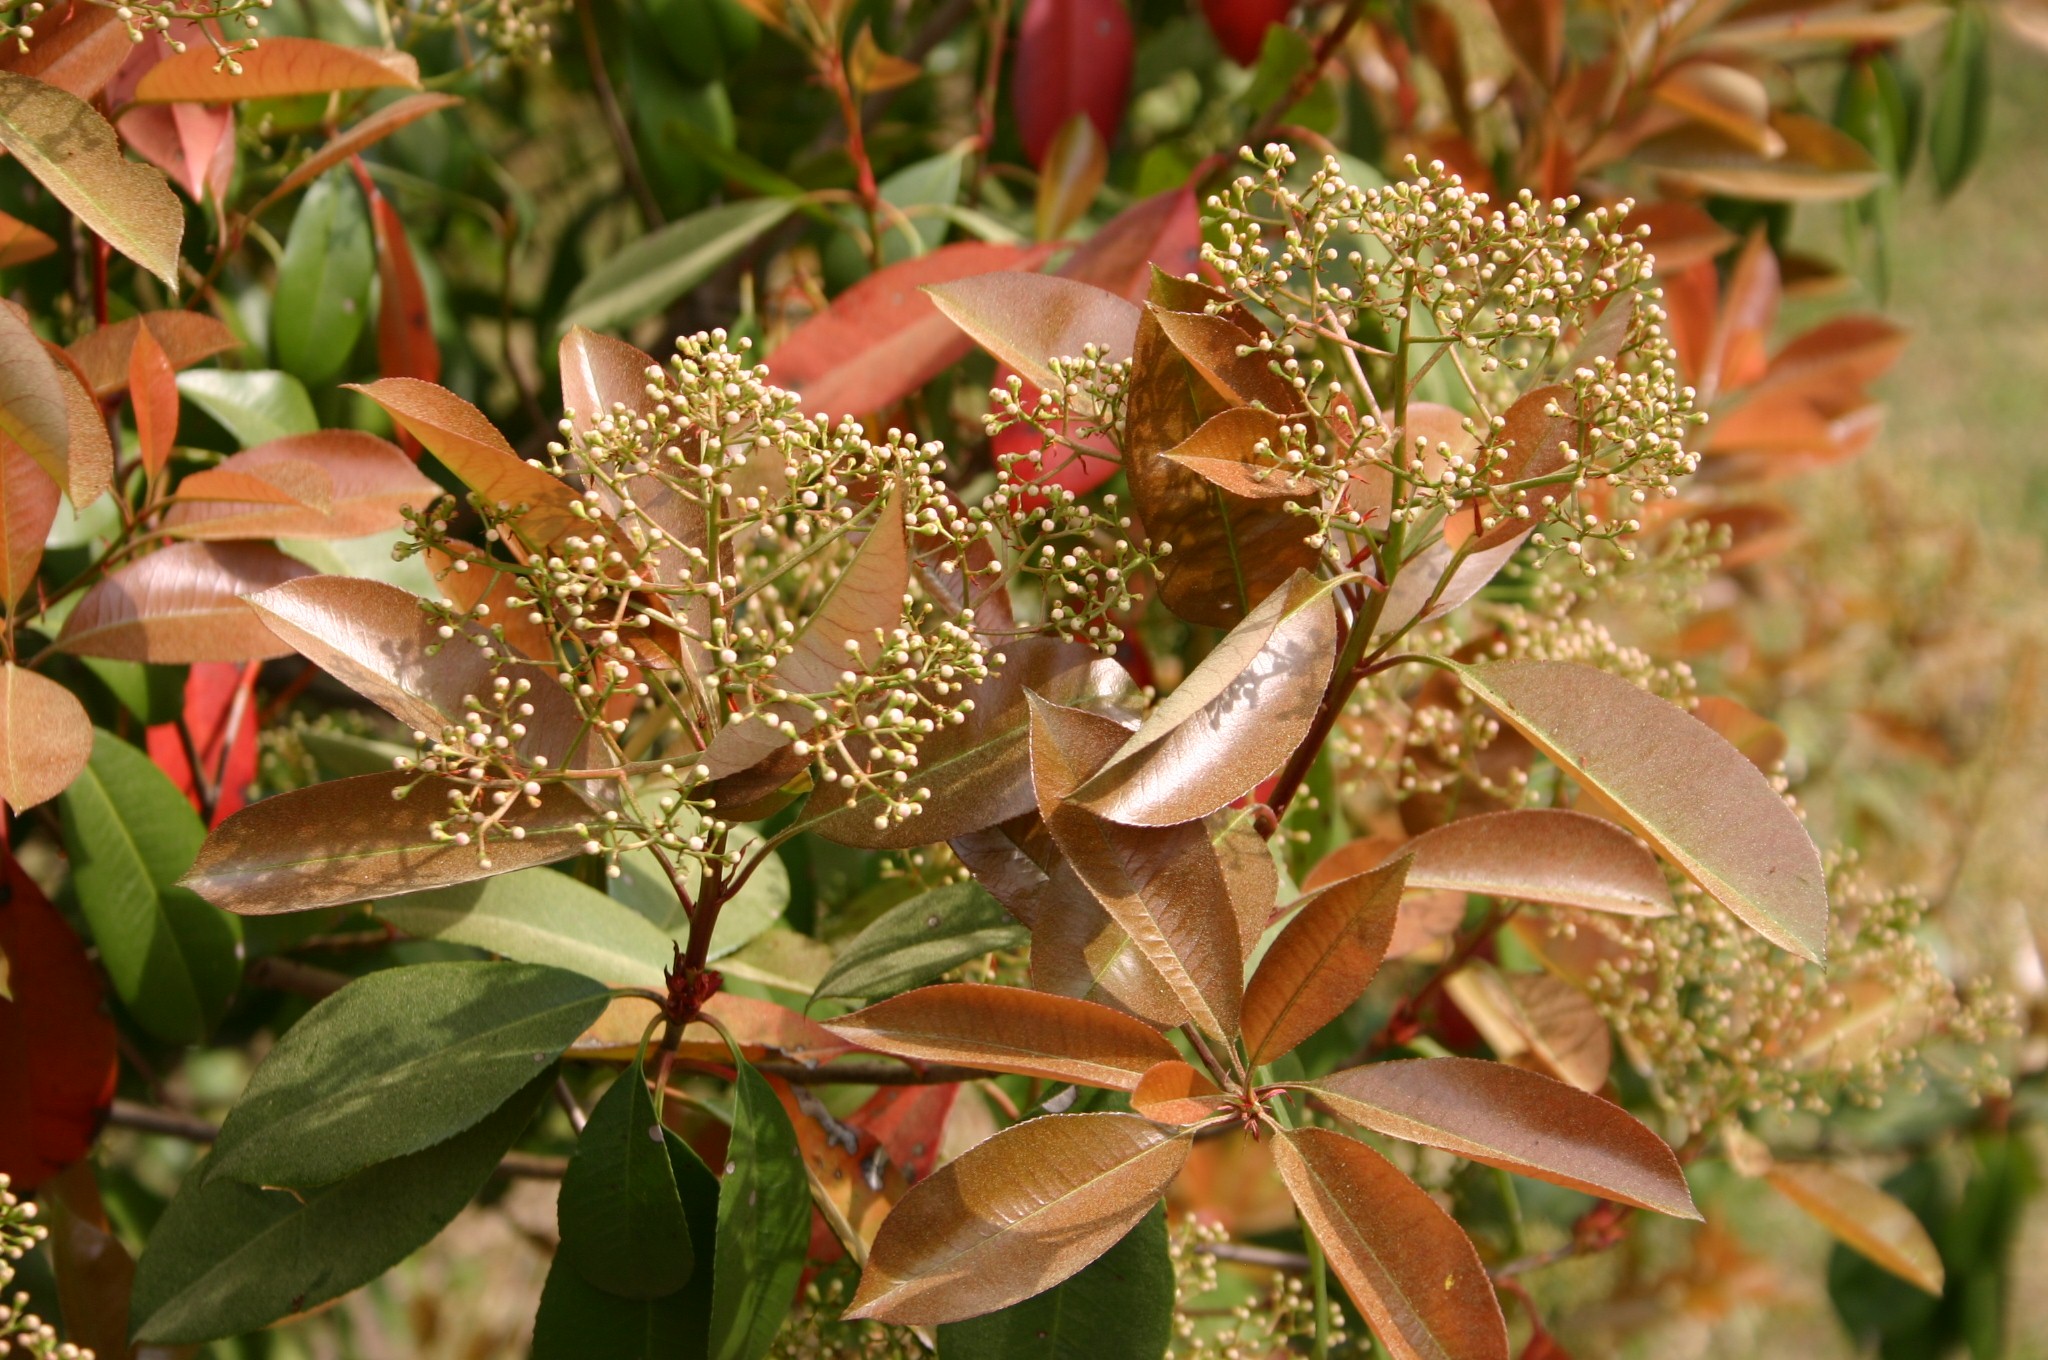 red tip photinia shrub